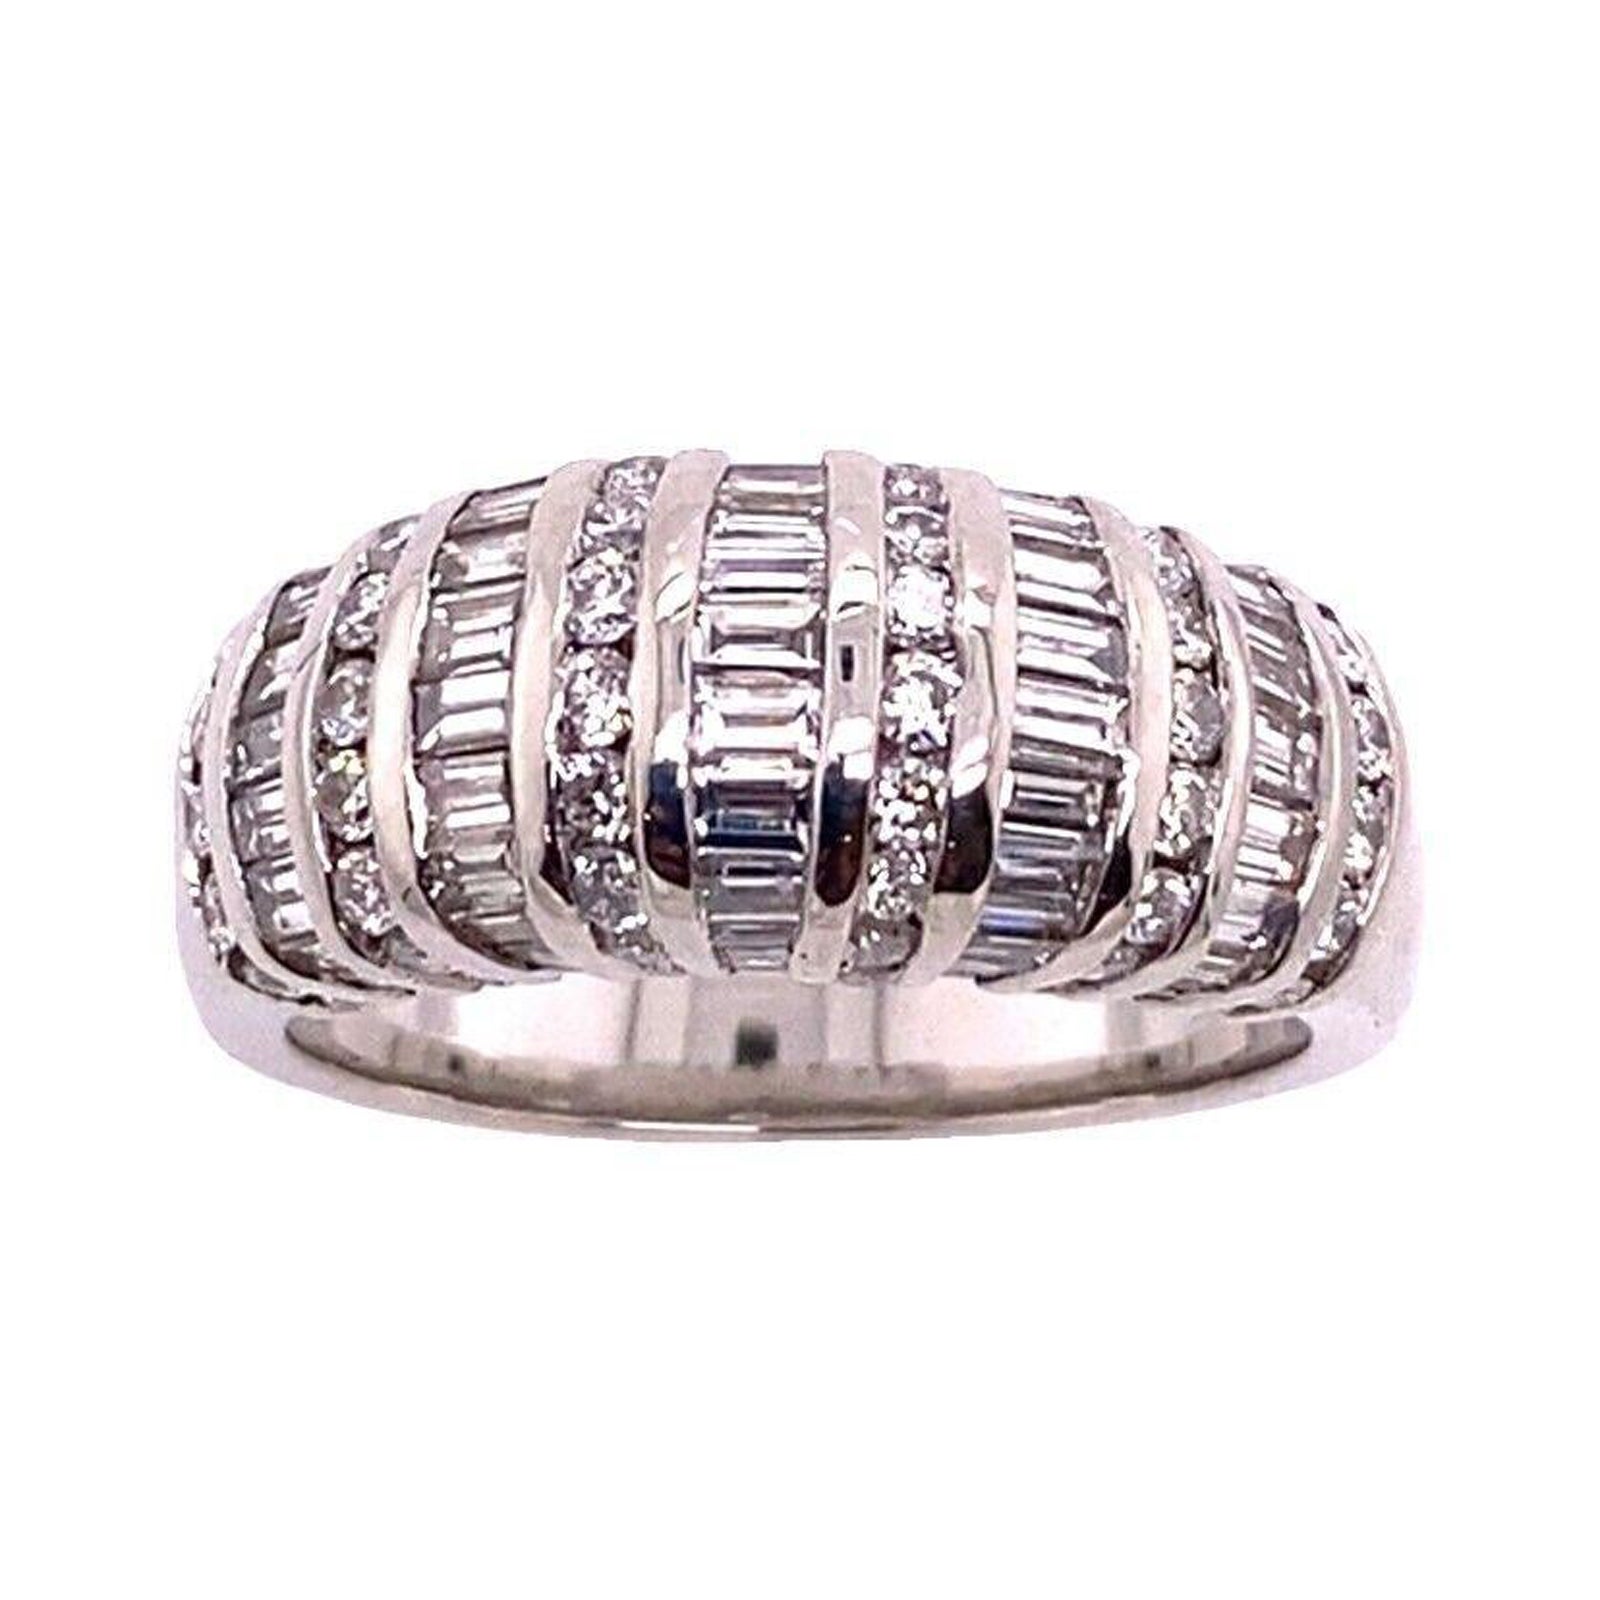 Solid Platinum Diamond Turban Ring Set with 2.56ct F/G VS Purity of Diamonds